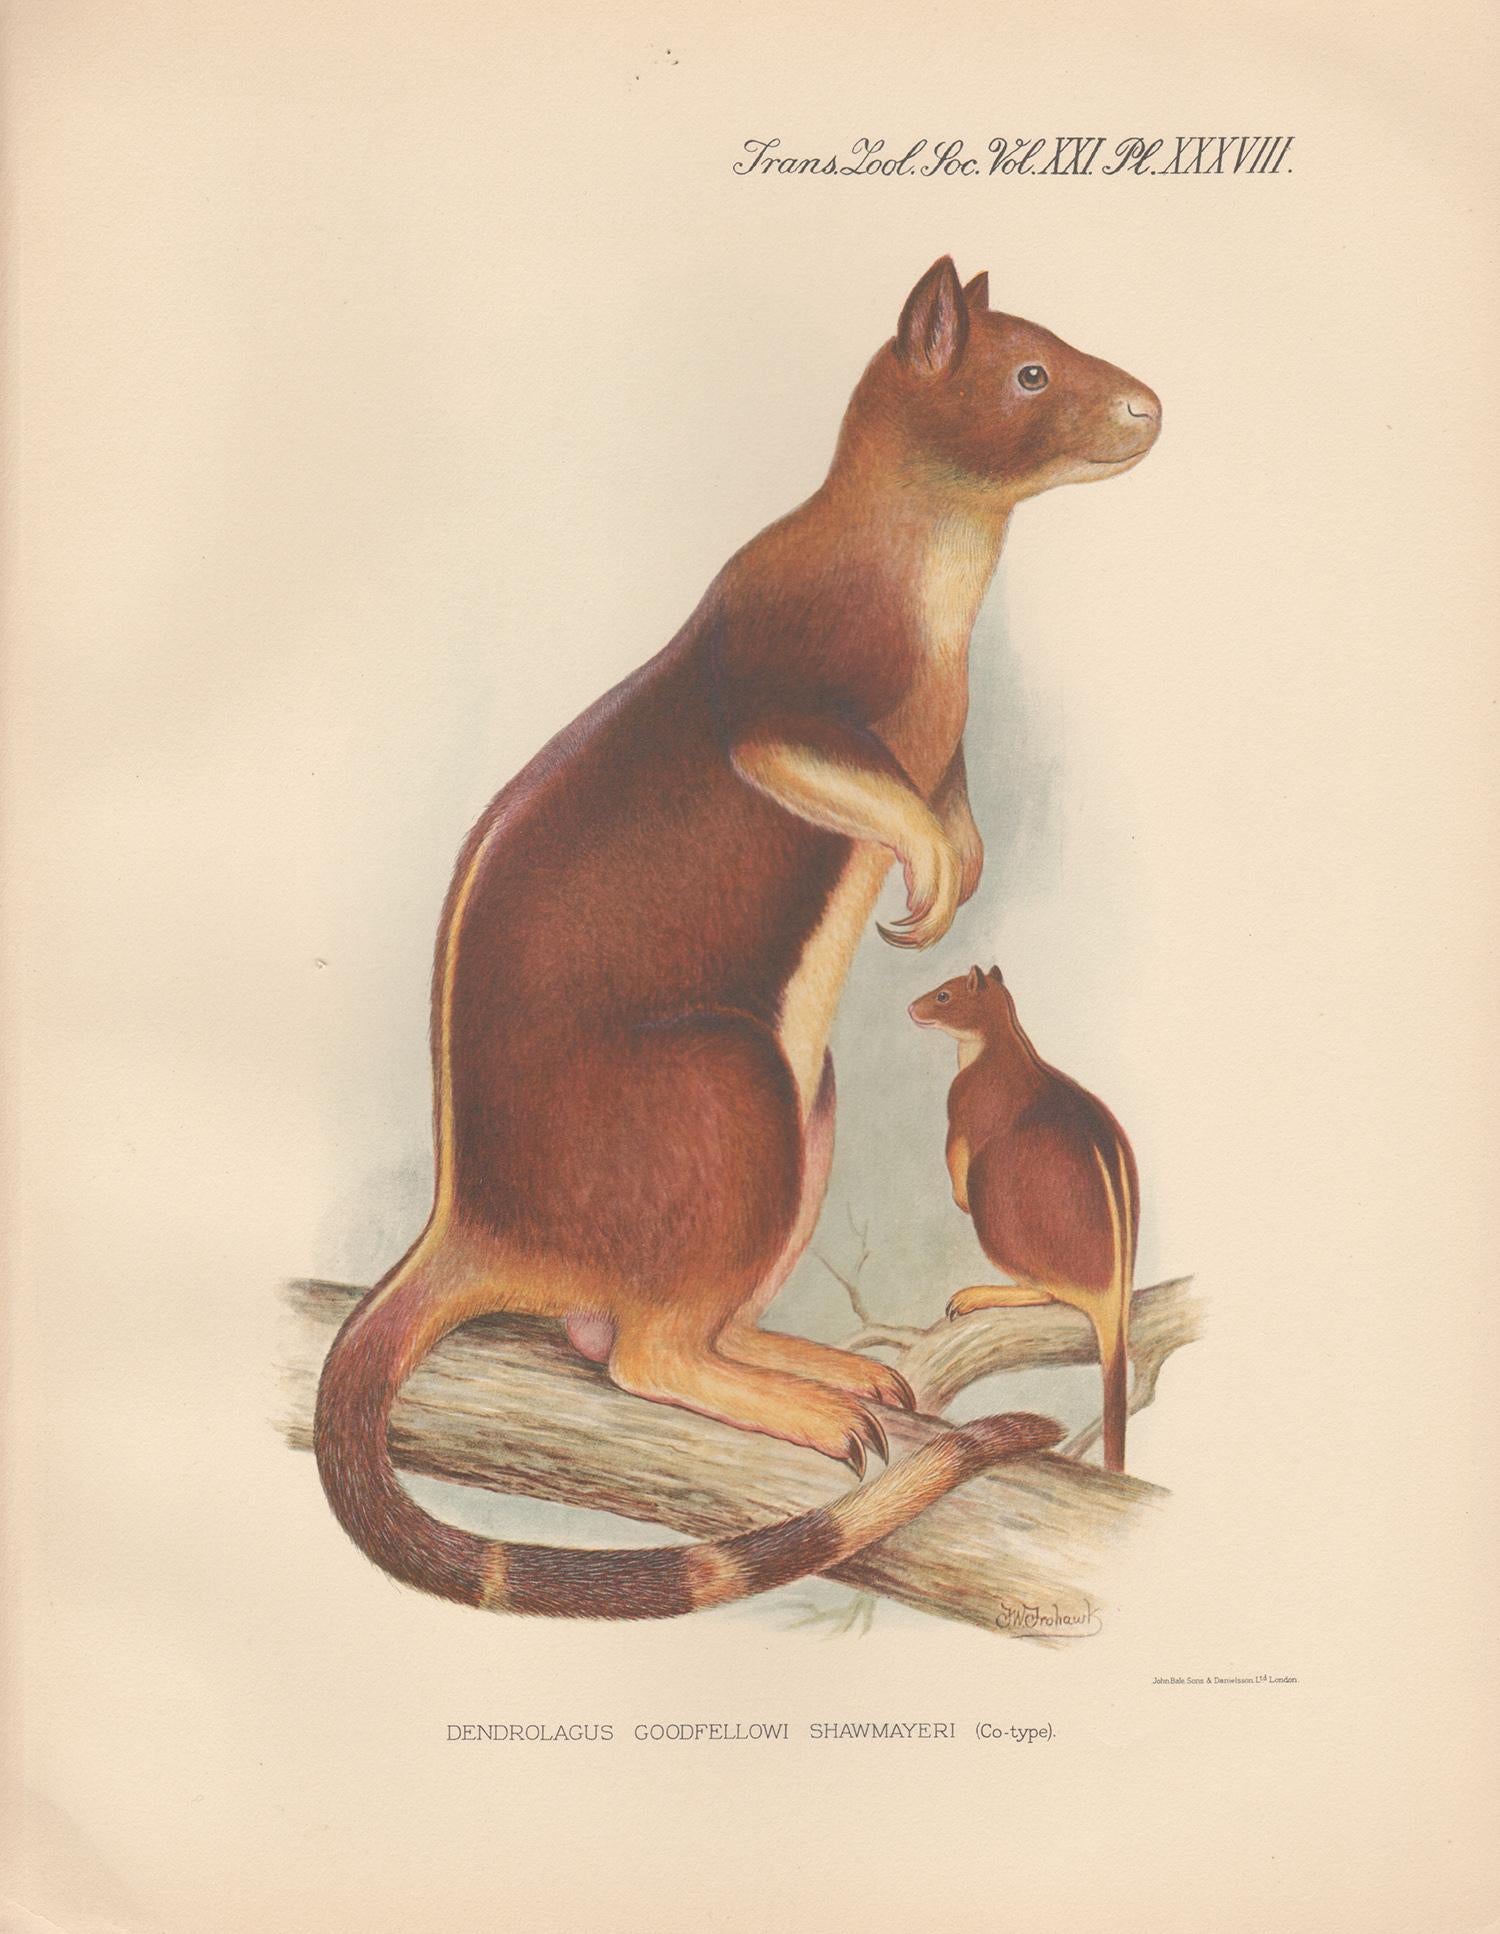 Frederick William Frohawk Animal Print - Shawmayer's Tree Kangaroo, New Guinea natural history animal lithograph, 1936